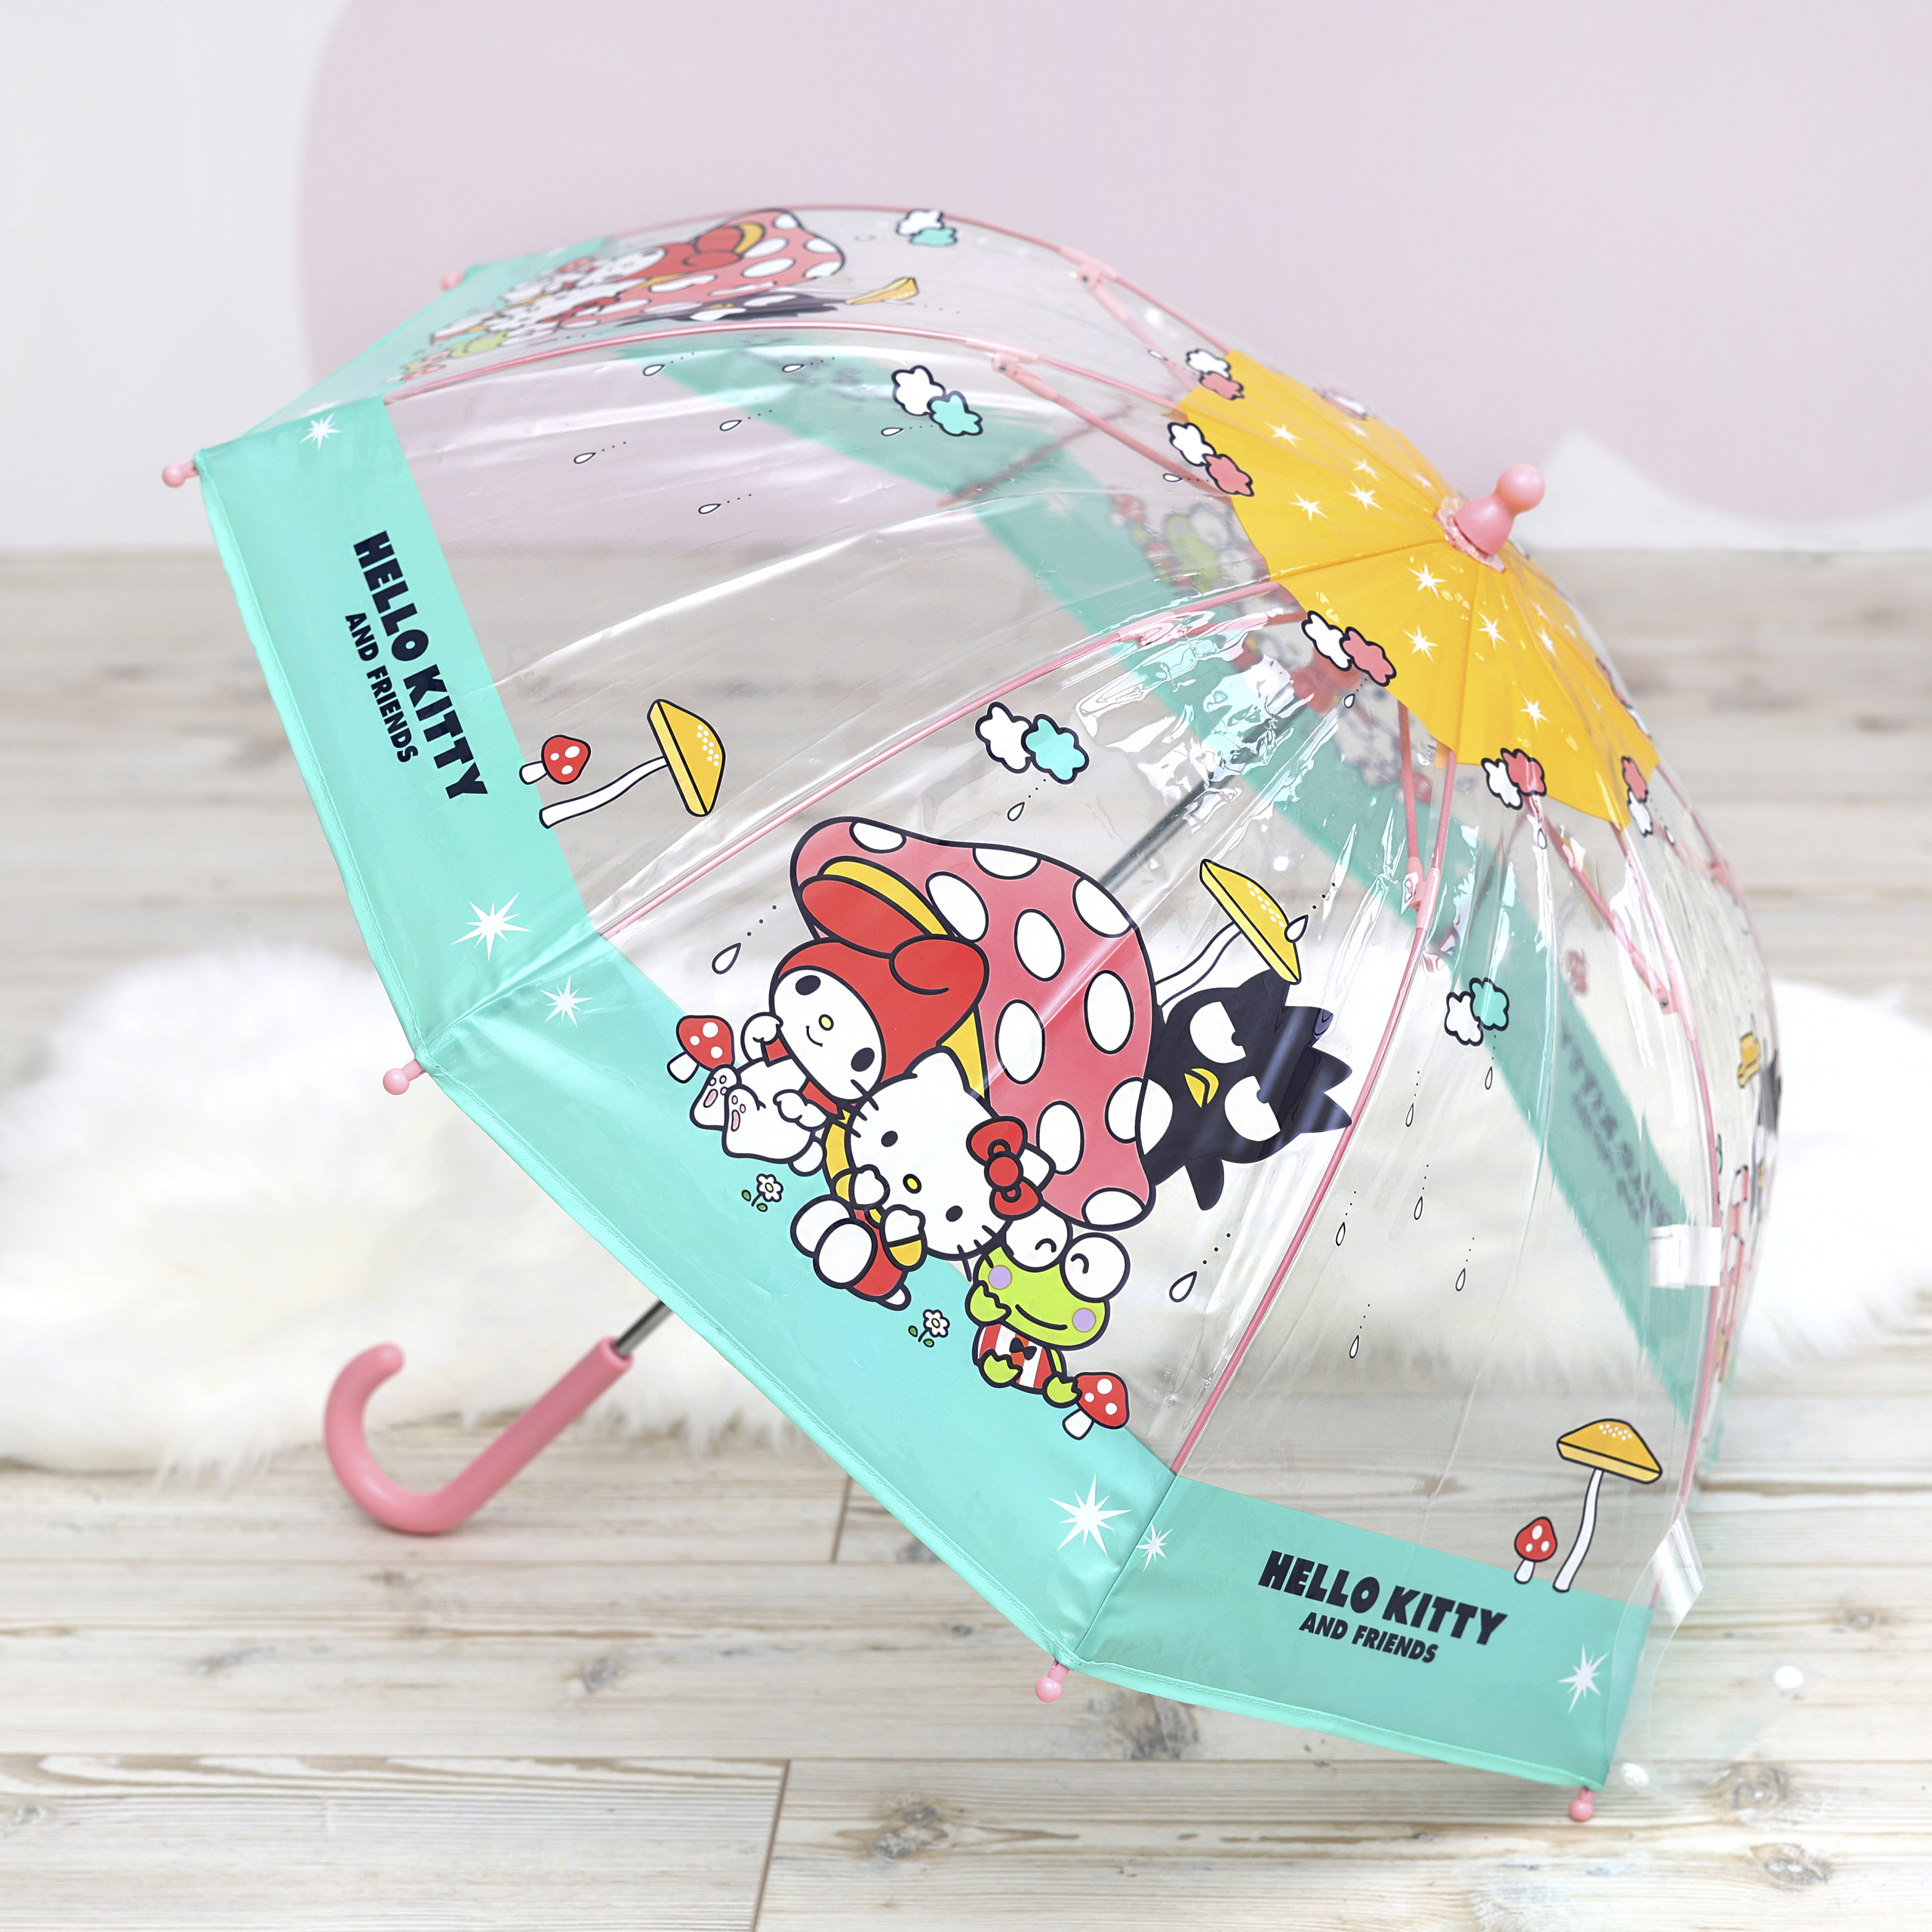 Hello Kitty and Friends hello kitty umbrella